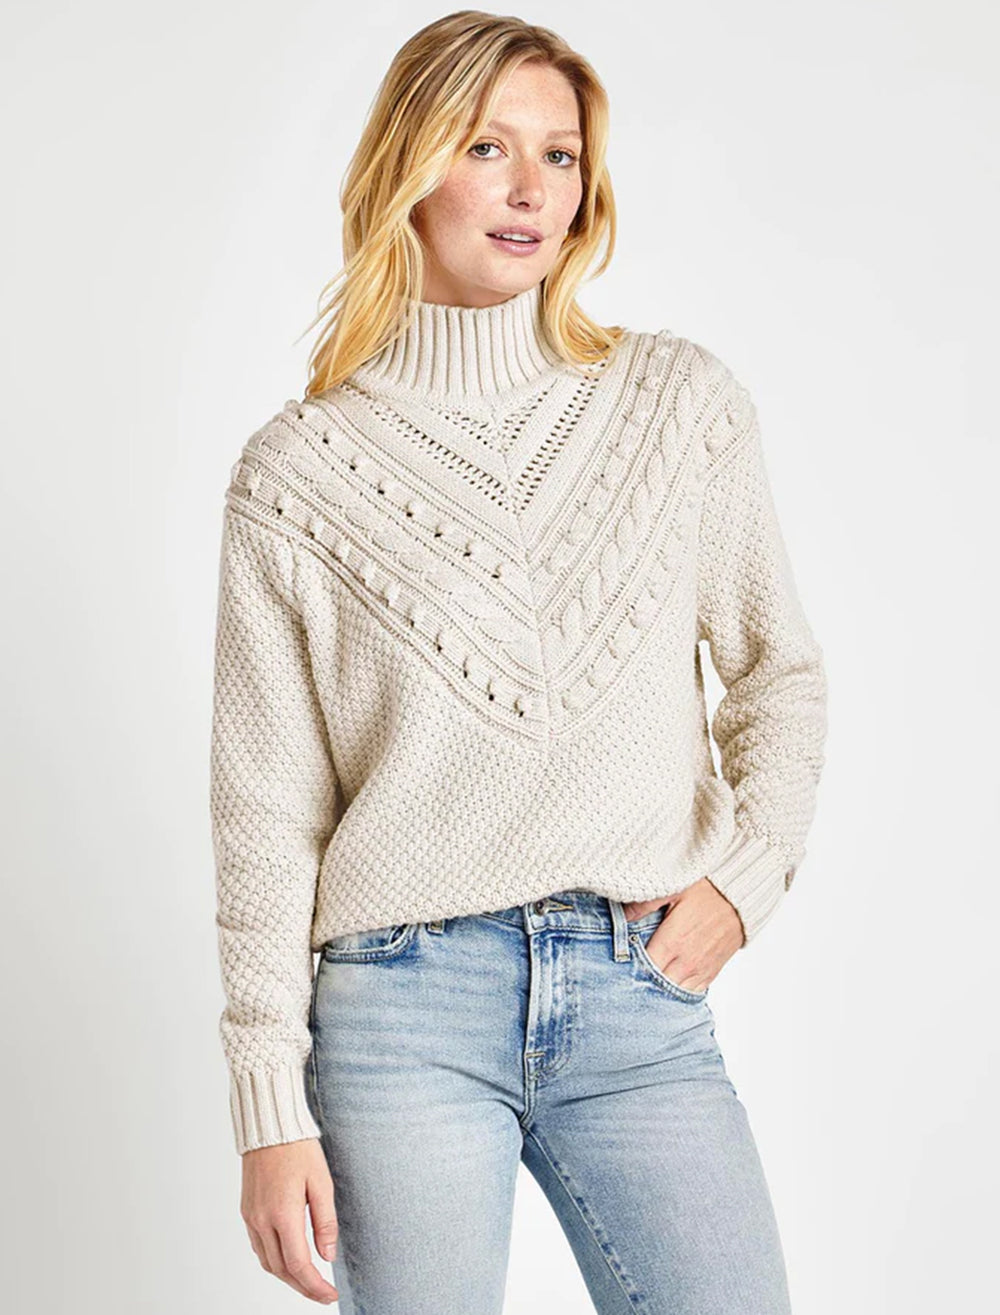 Model wearing Splendid's maggie turtleneck sweater in white sand.